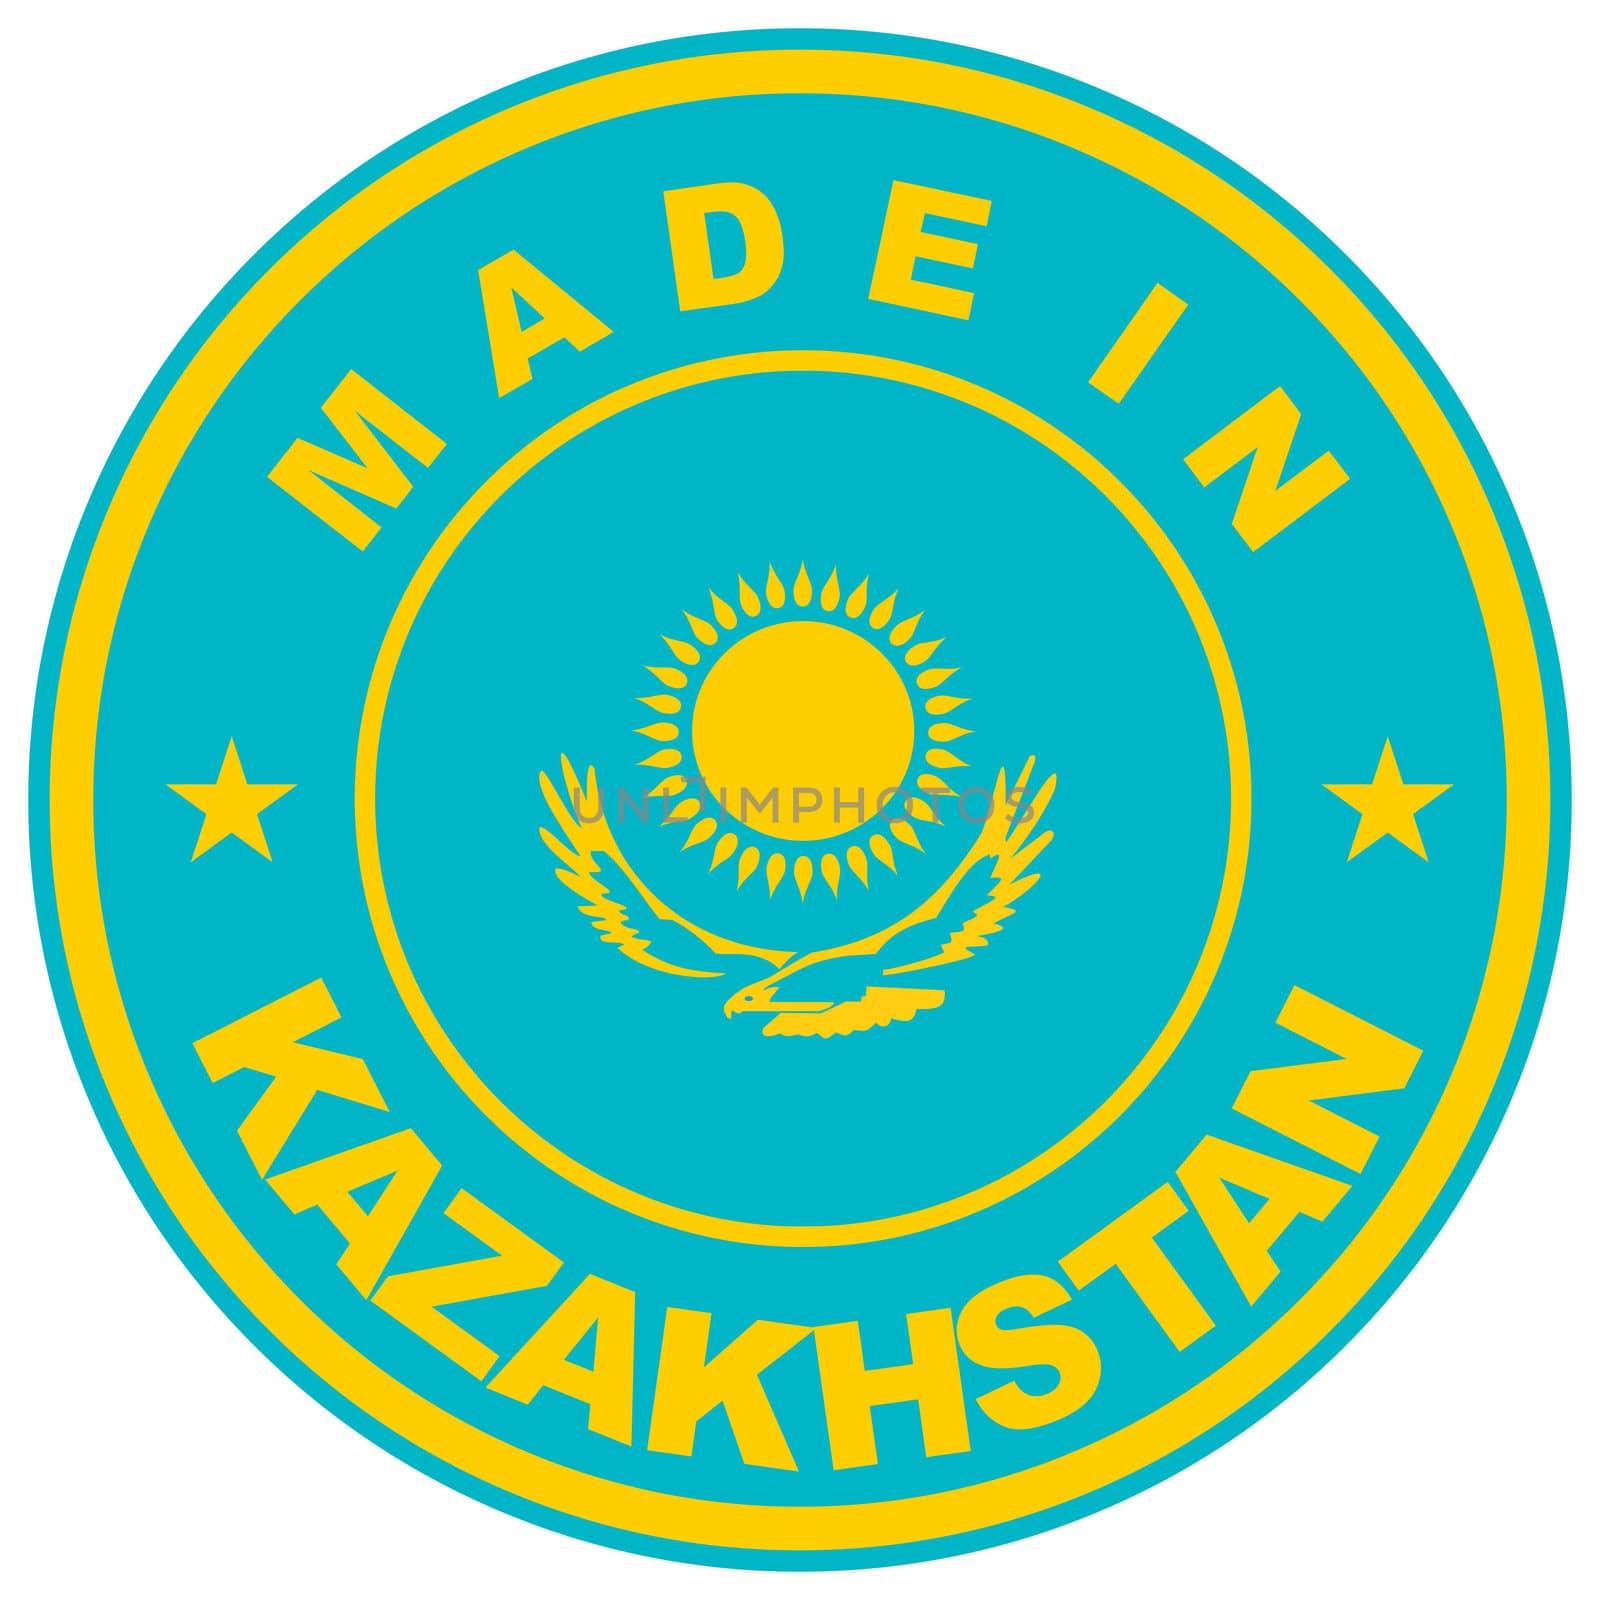 made in kazakhstan by tony4urban